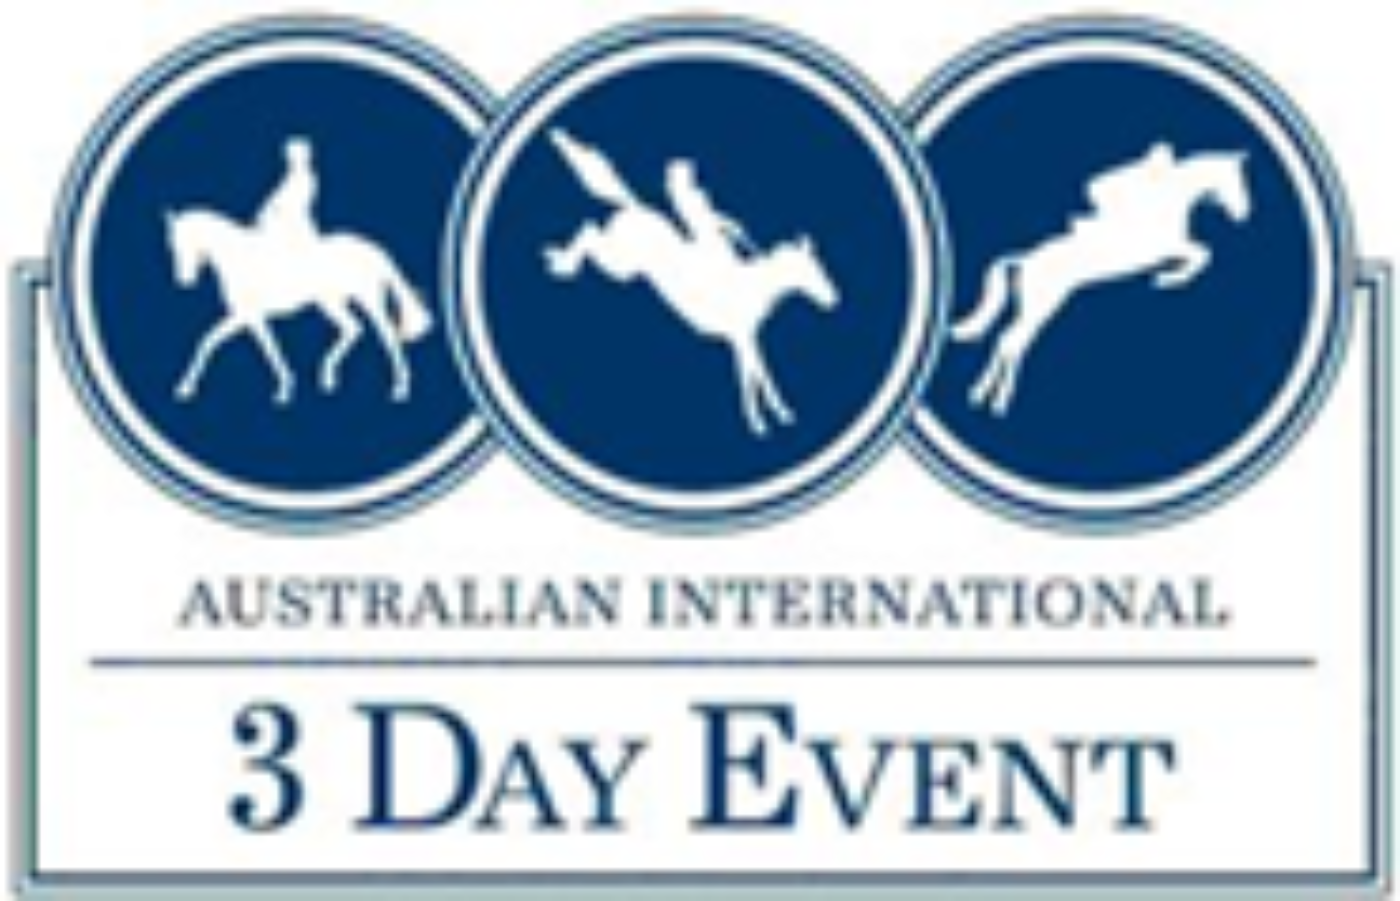 Aussie логотип. The London International Horse show эмблема. Бренд с кенгуру на эмблеме австралиан. Australian International 3 Day event Adelaide 2011 кепка.